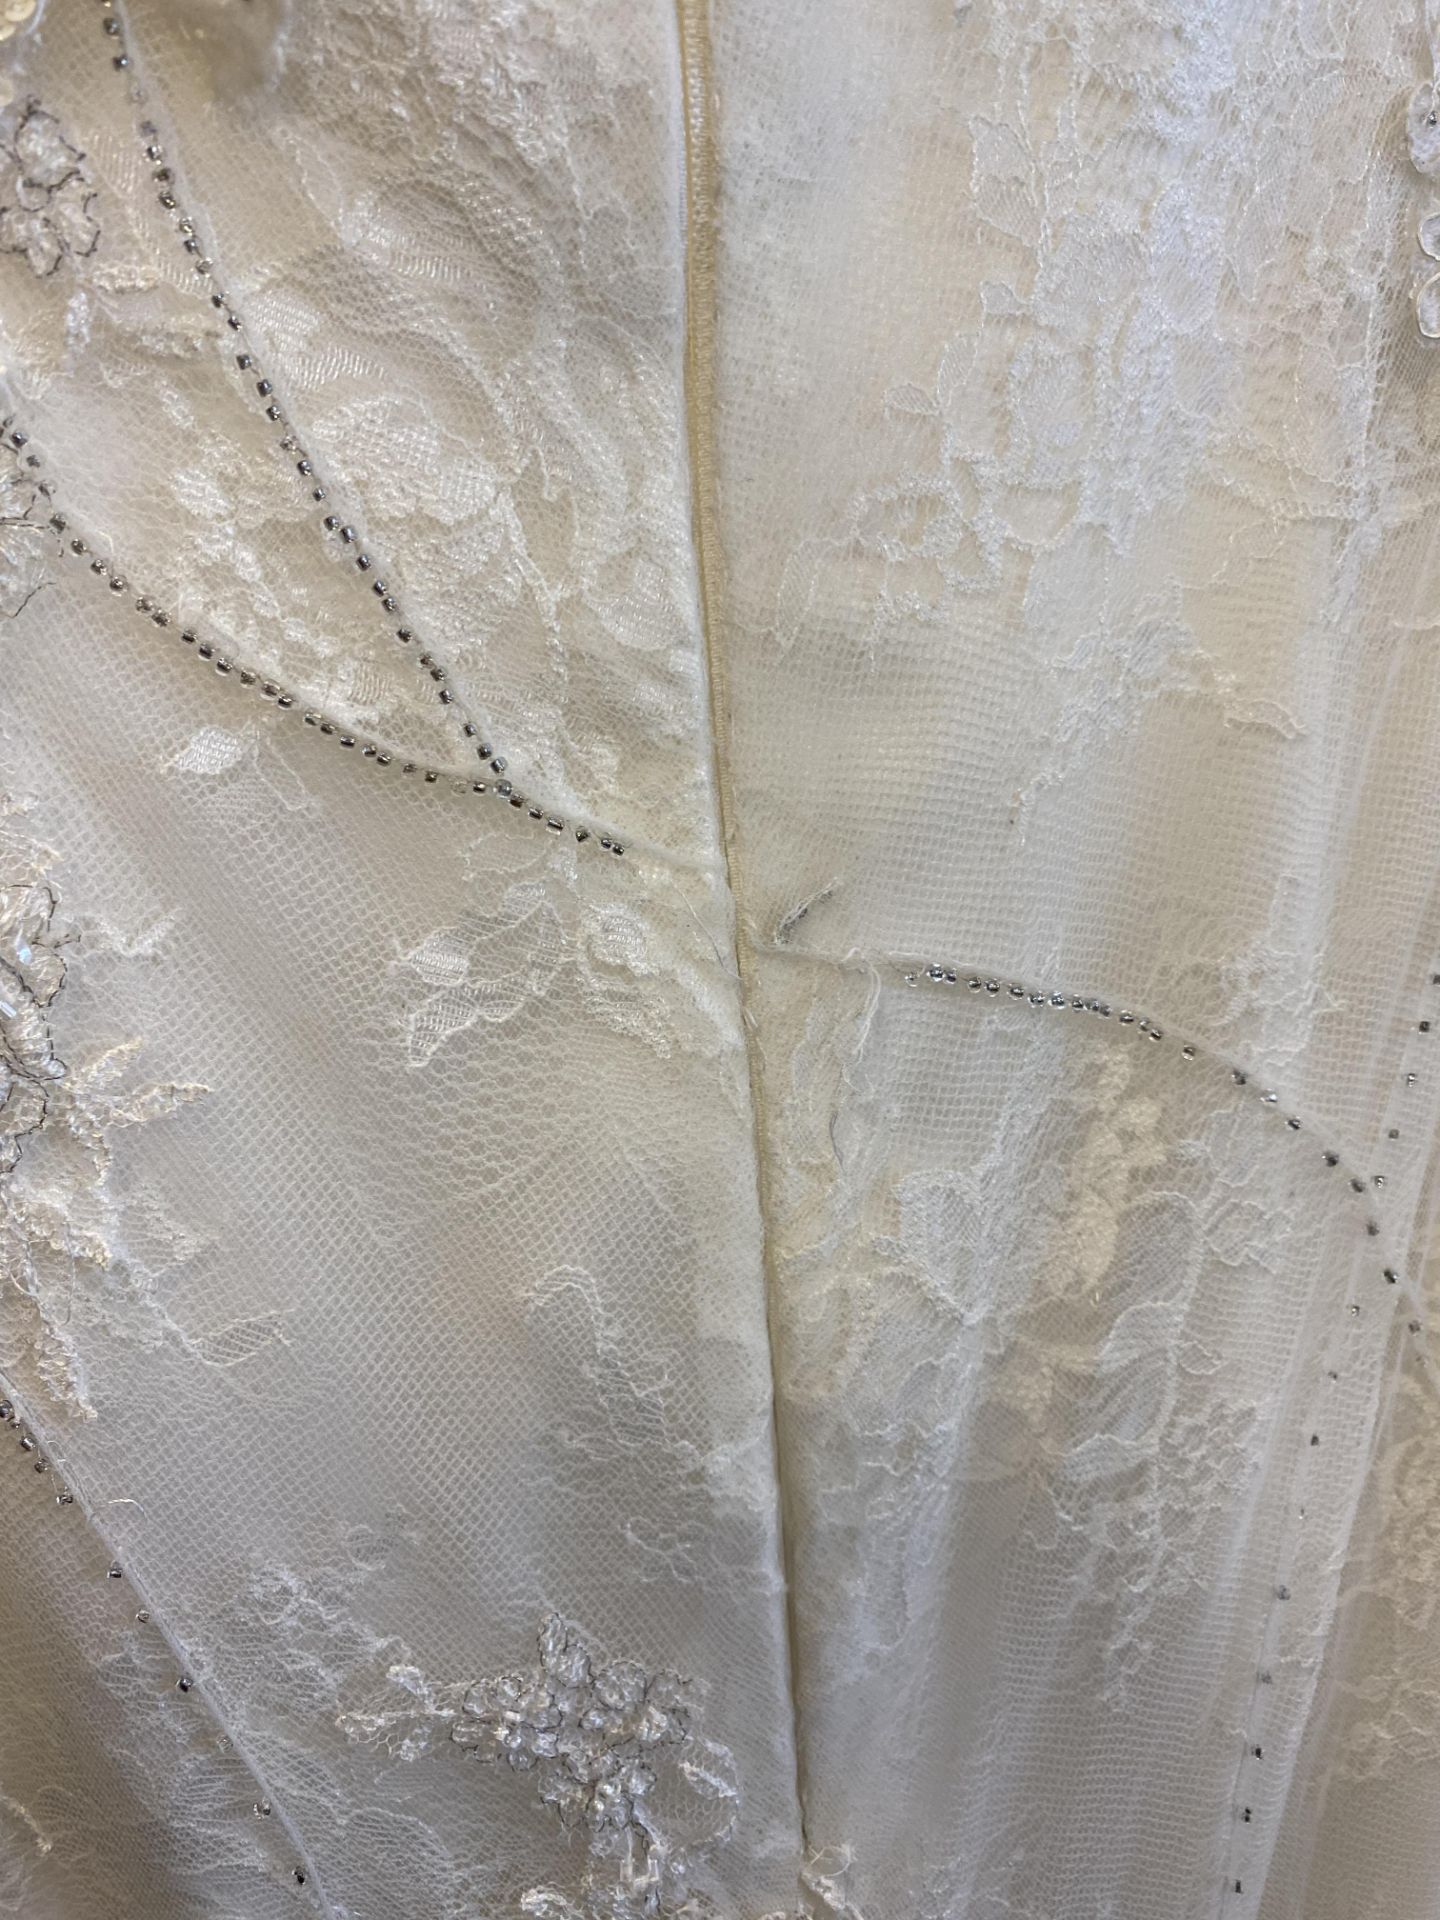 1 x LUSAN MANDONGUS Elegant Strapless Lace & Chiffon Fishtail Designer Wedding Dress RRP £1,950 UK12 - Image 3 of 9